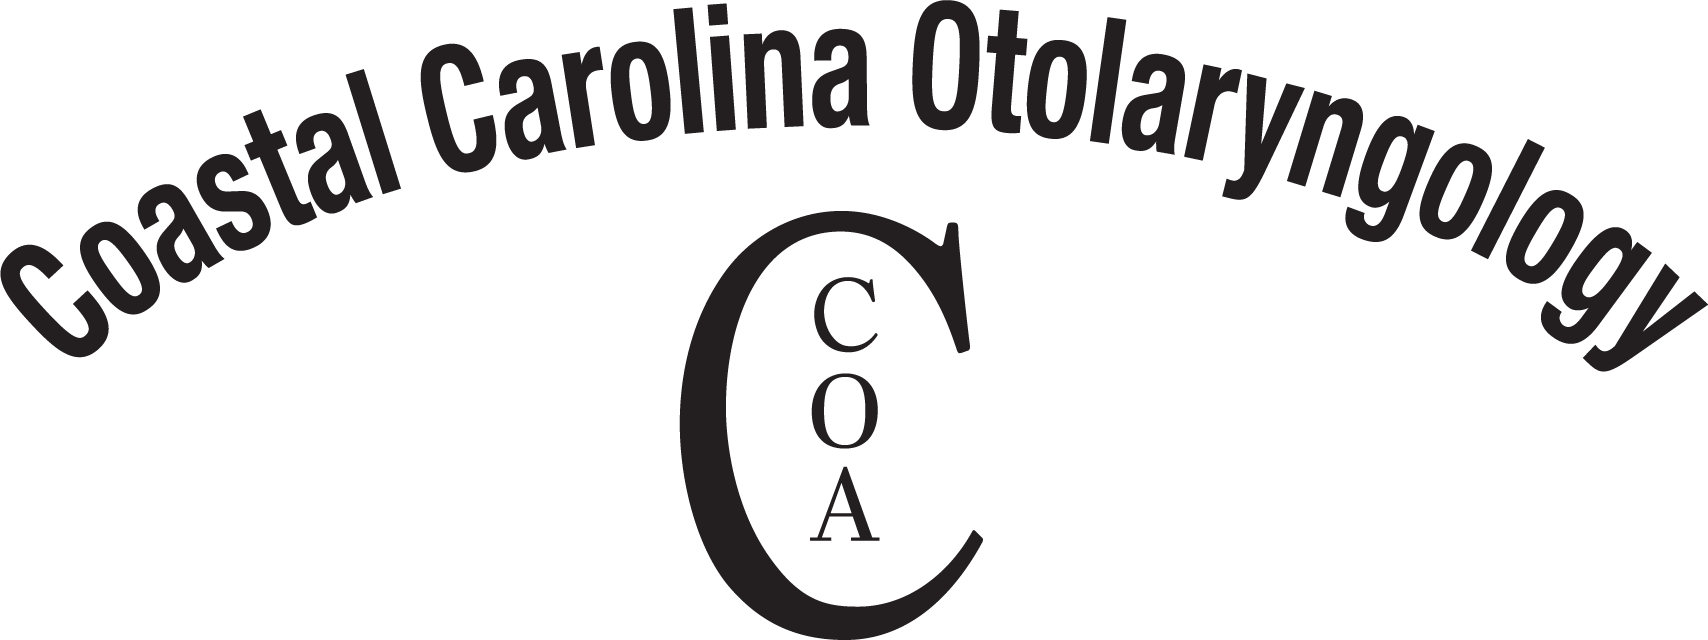 Coastal Carolina Otolaryngology Associates